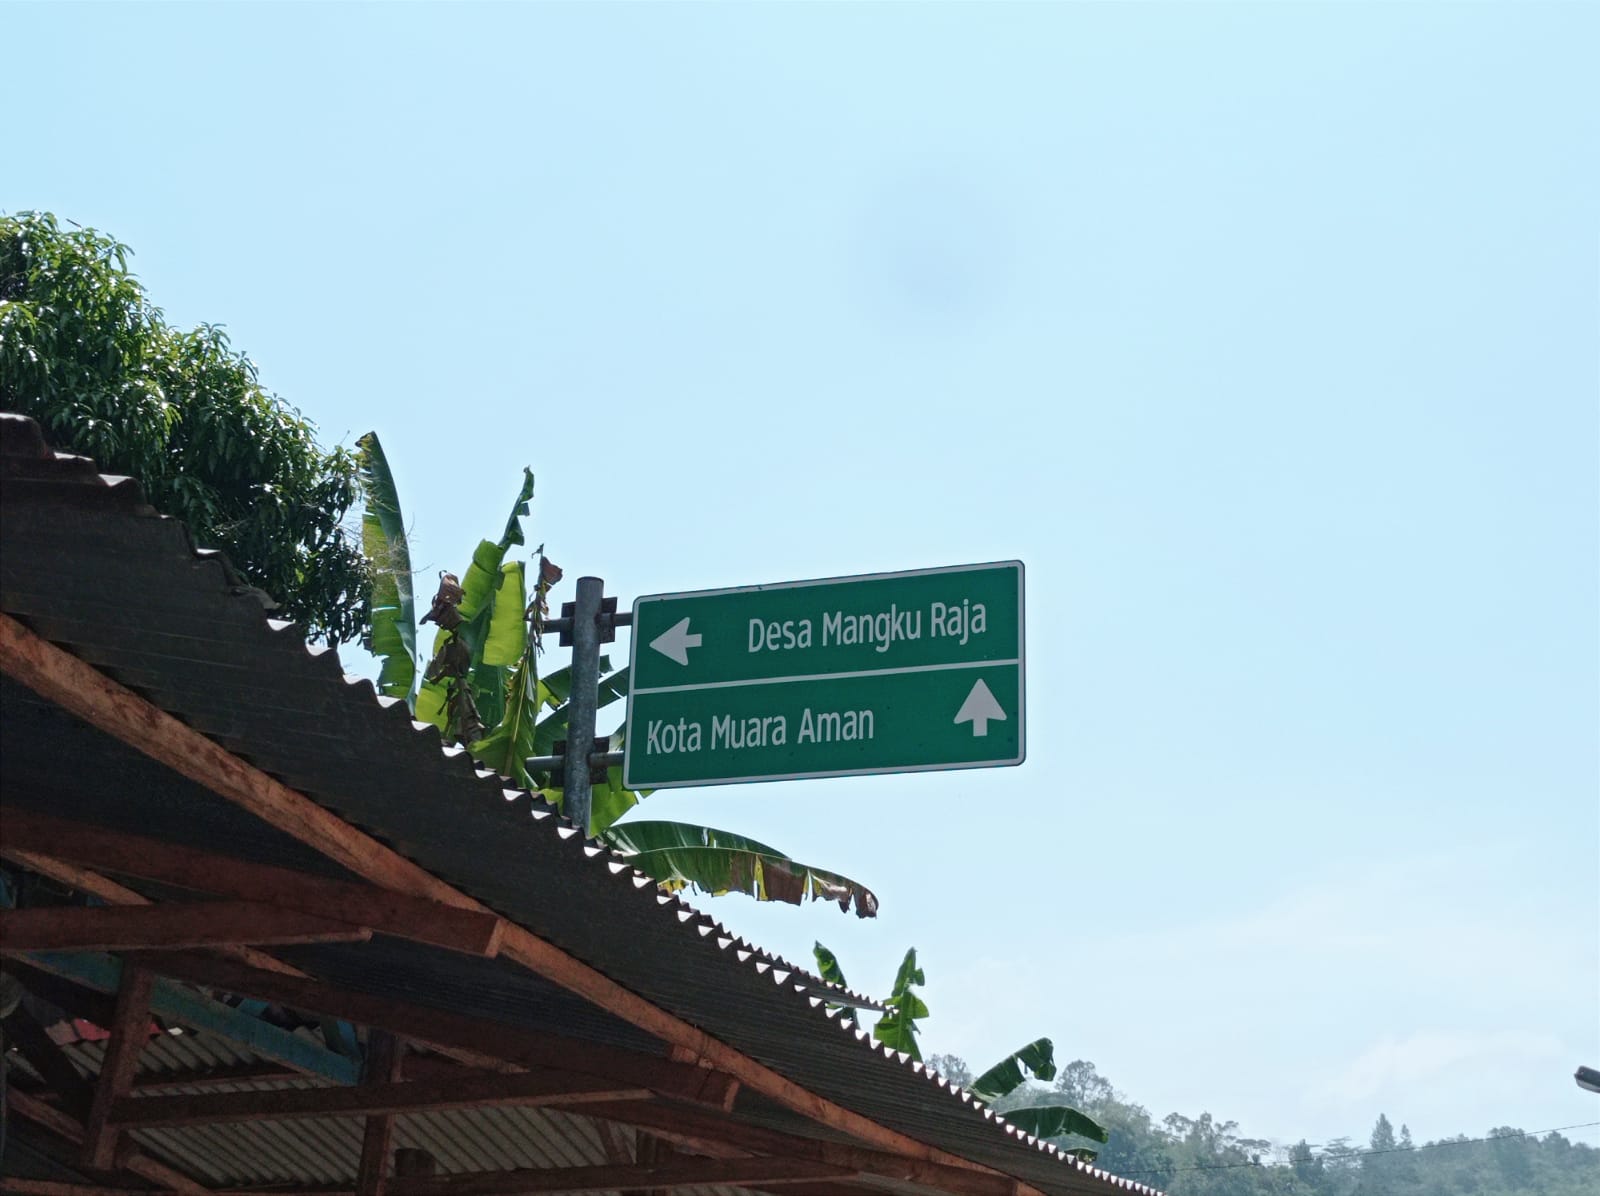  Ingin Berkunjung ke Desa Mangkurajo Bekas Kebun Ibu Tien, Lokasinya di Lebong? Ini Dia Rutenya